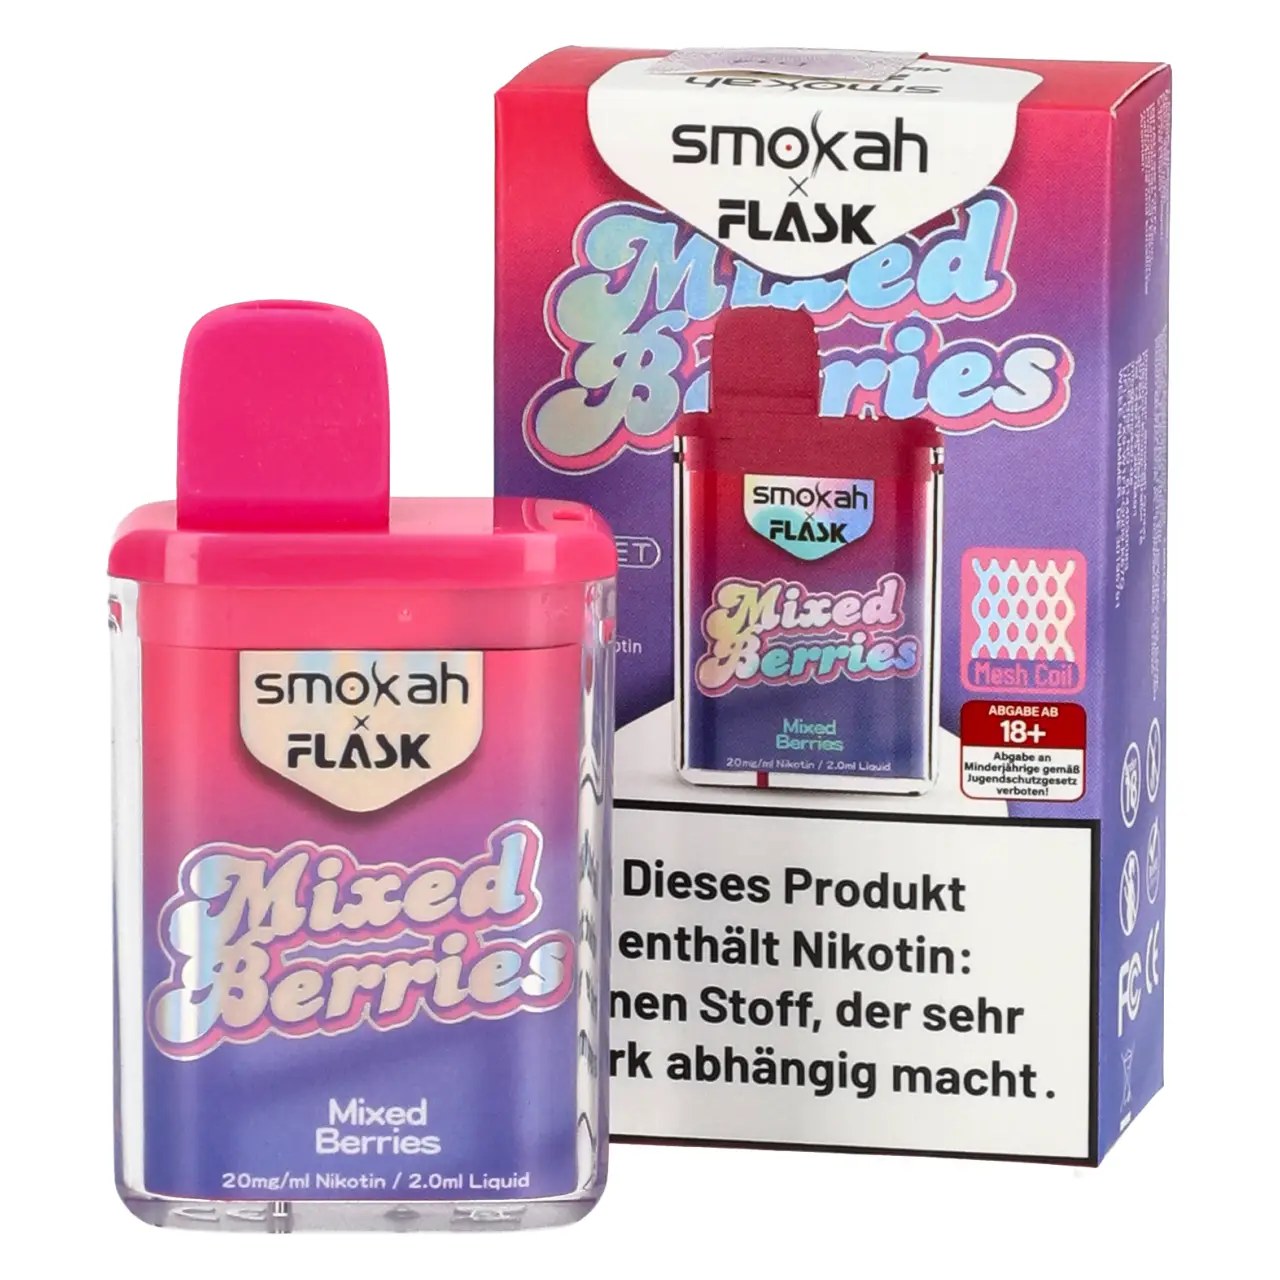 Mixed Berries - Smokah x Flask Pocket Einweg Vape